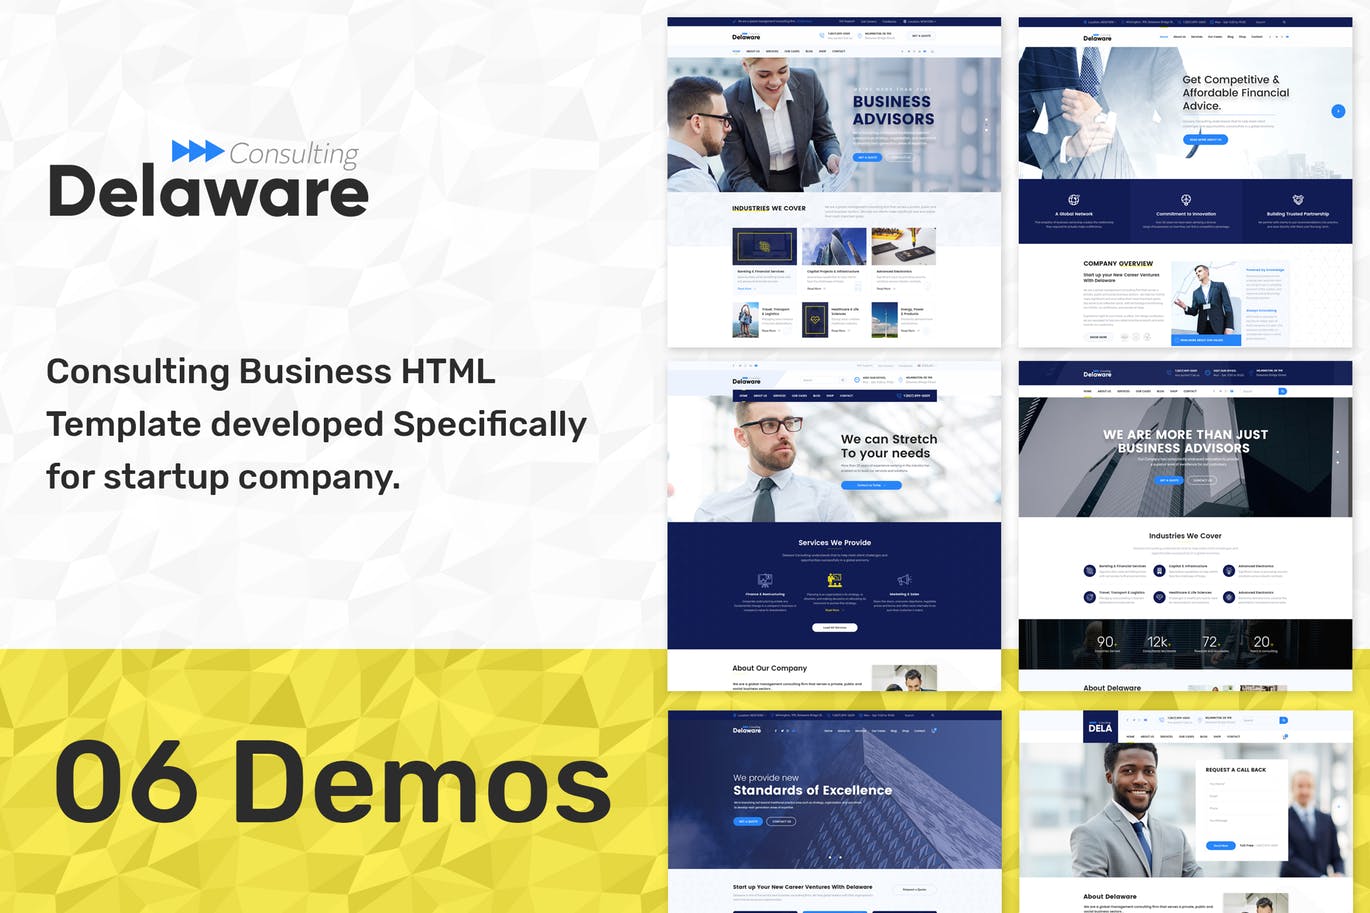 企业业务拓展网站HTML模板第一素材精选 Delaware – Start up Business HTML Template插图